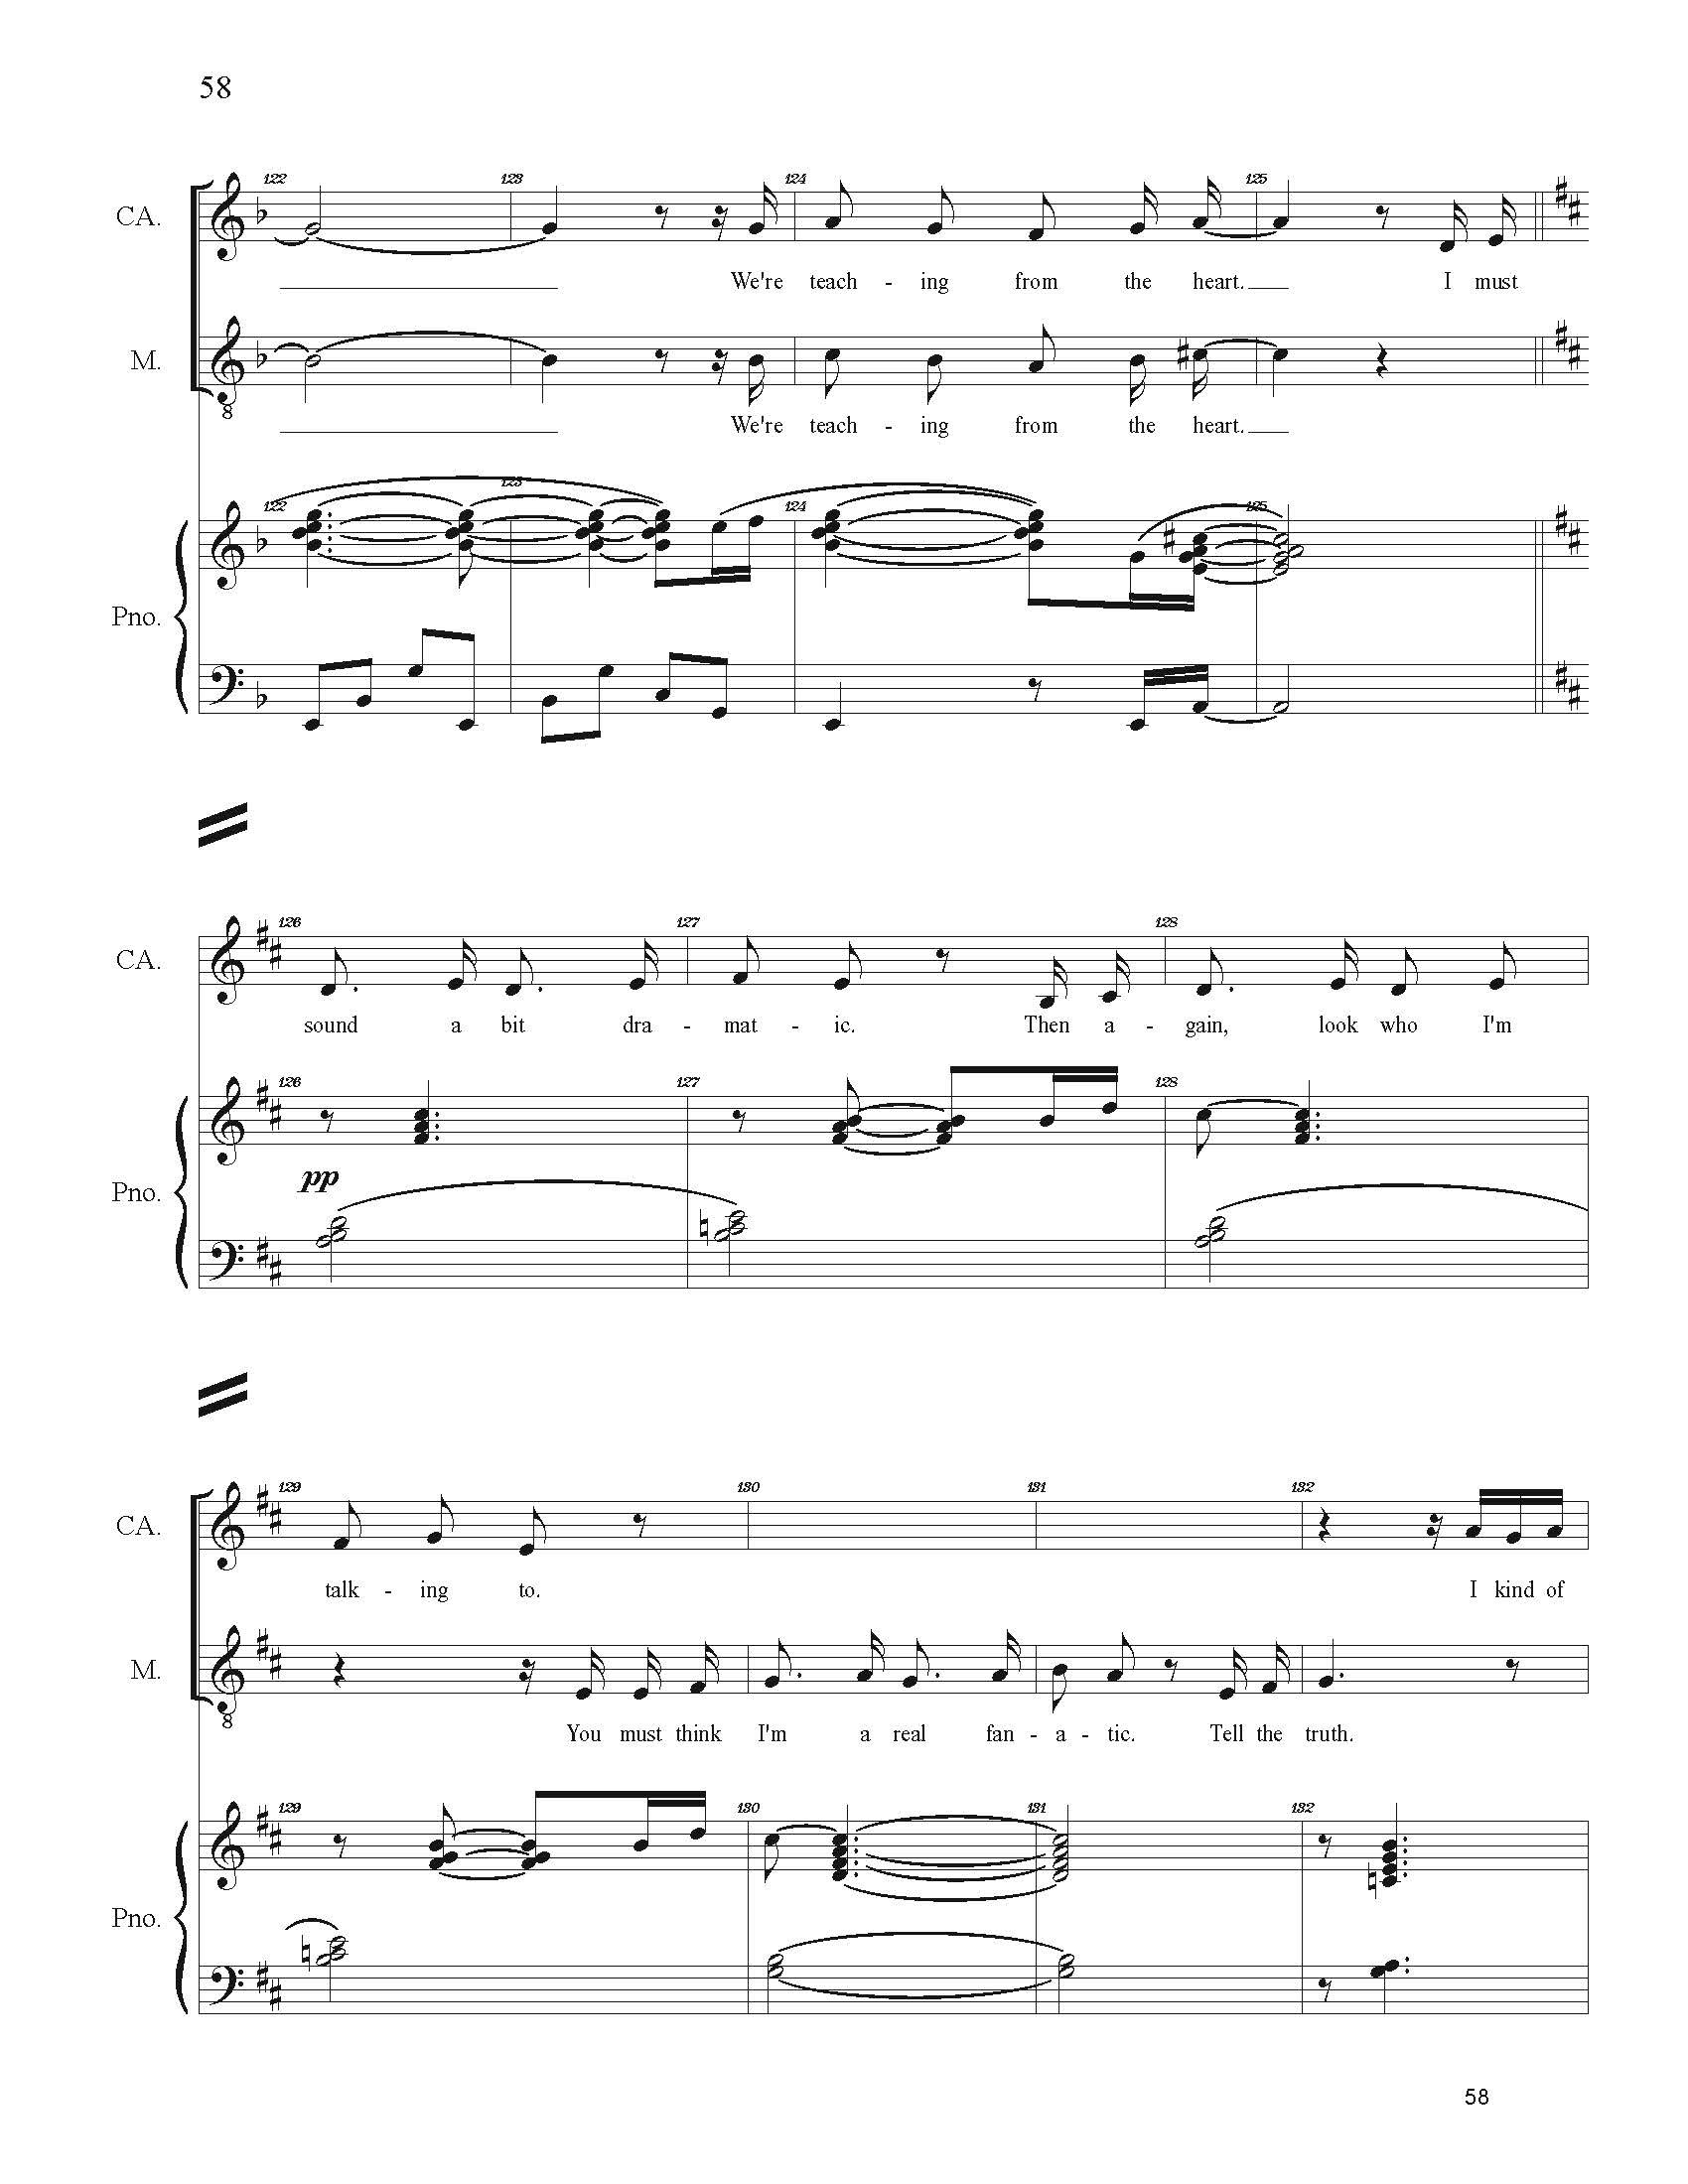 FULL PIANO VOCAL SCORE DRAFT 1 - Score_Page_058.jpg